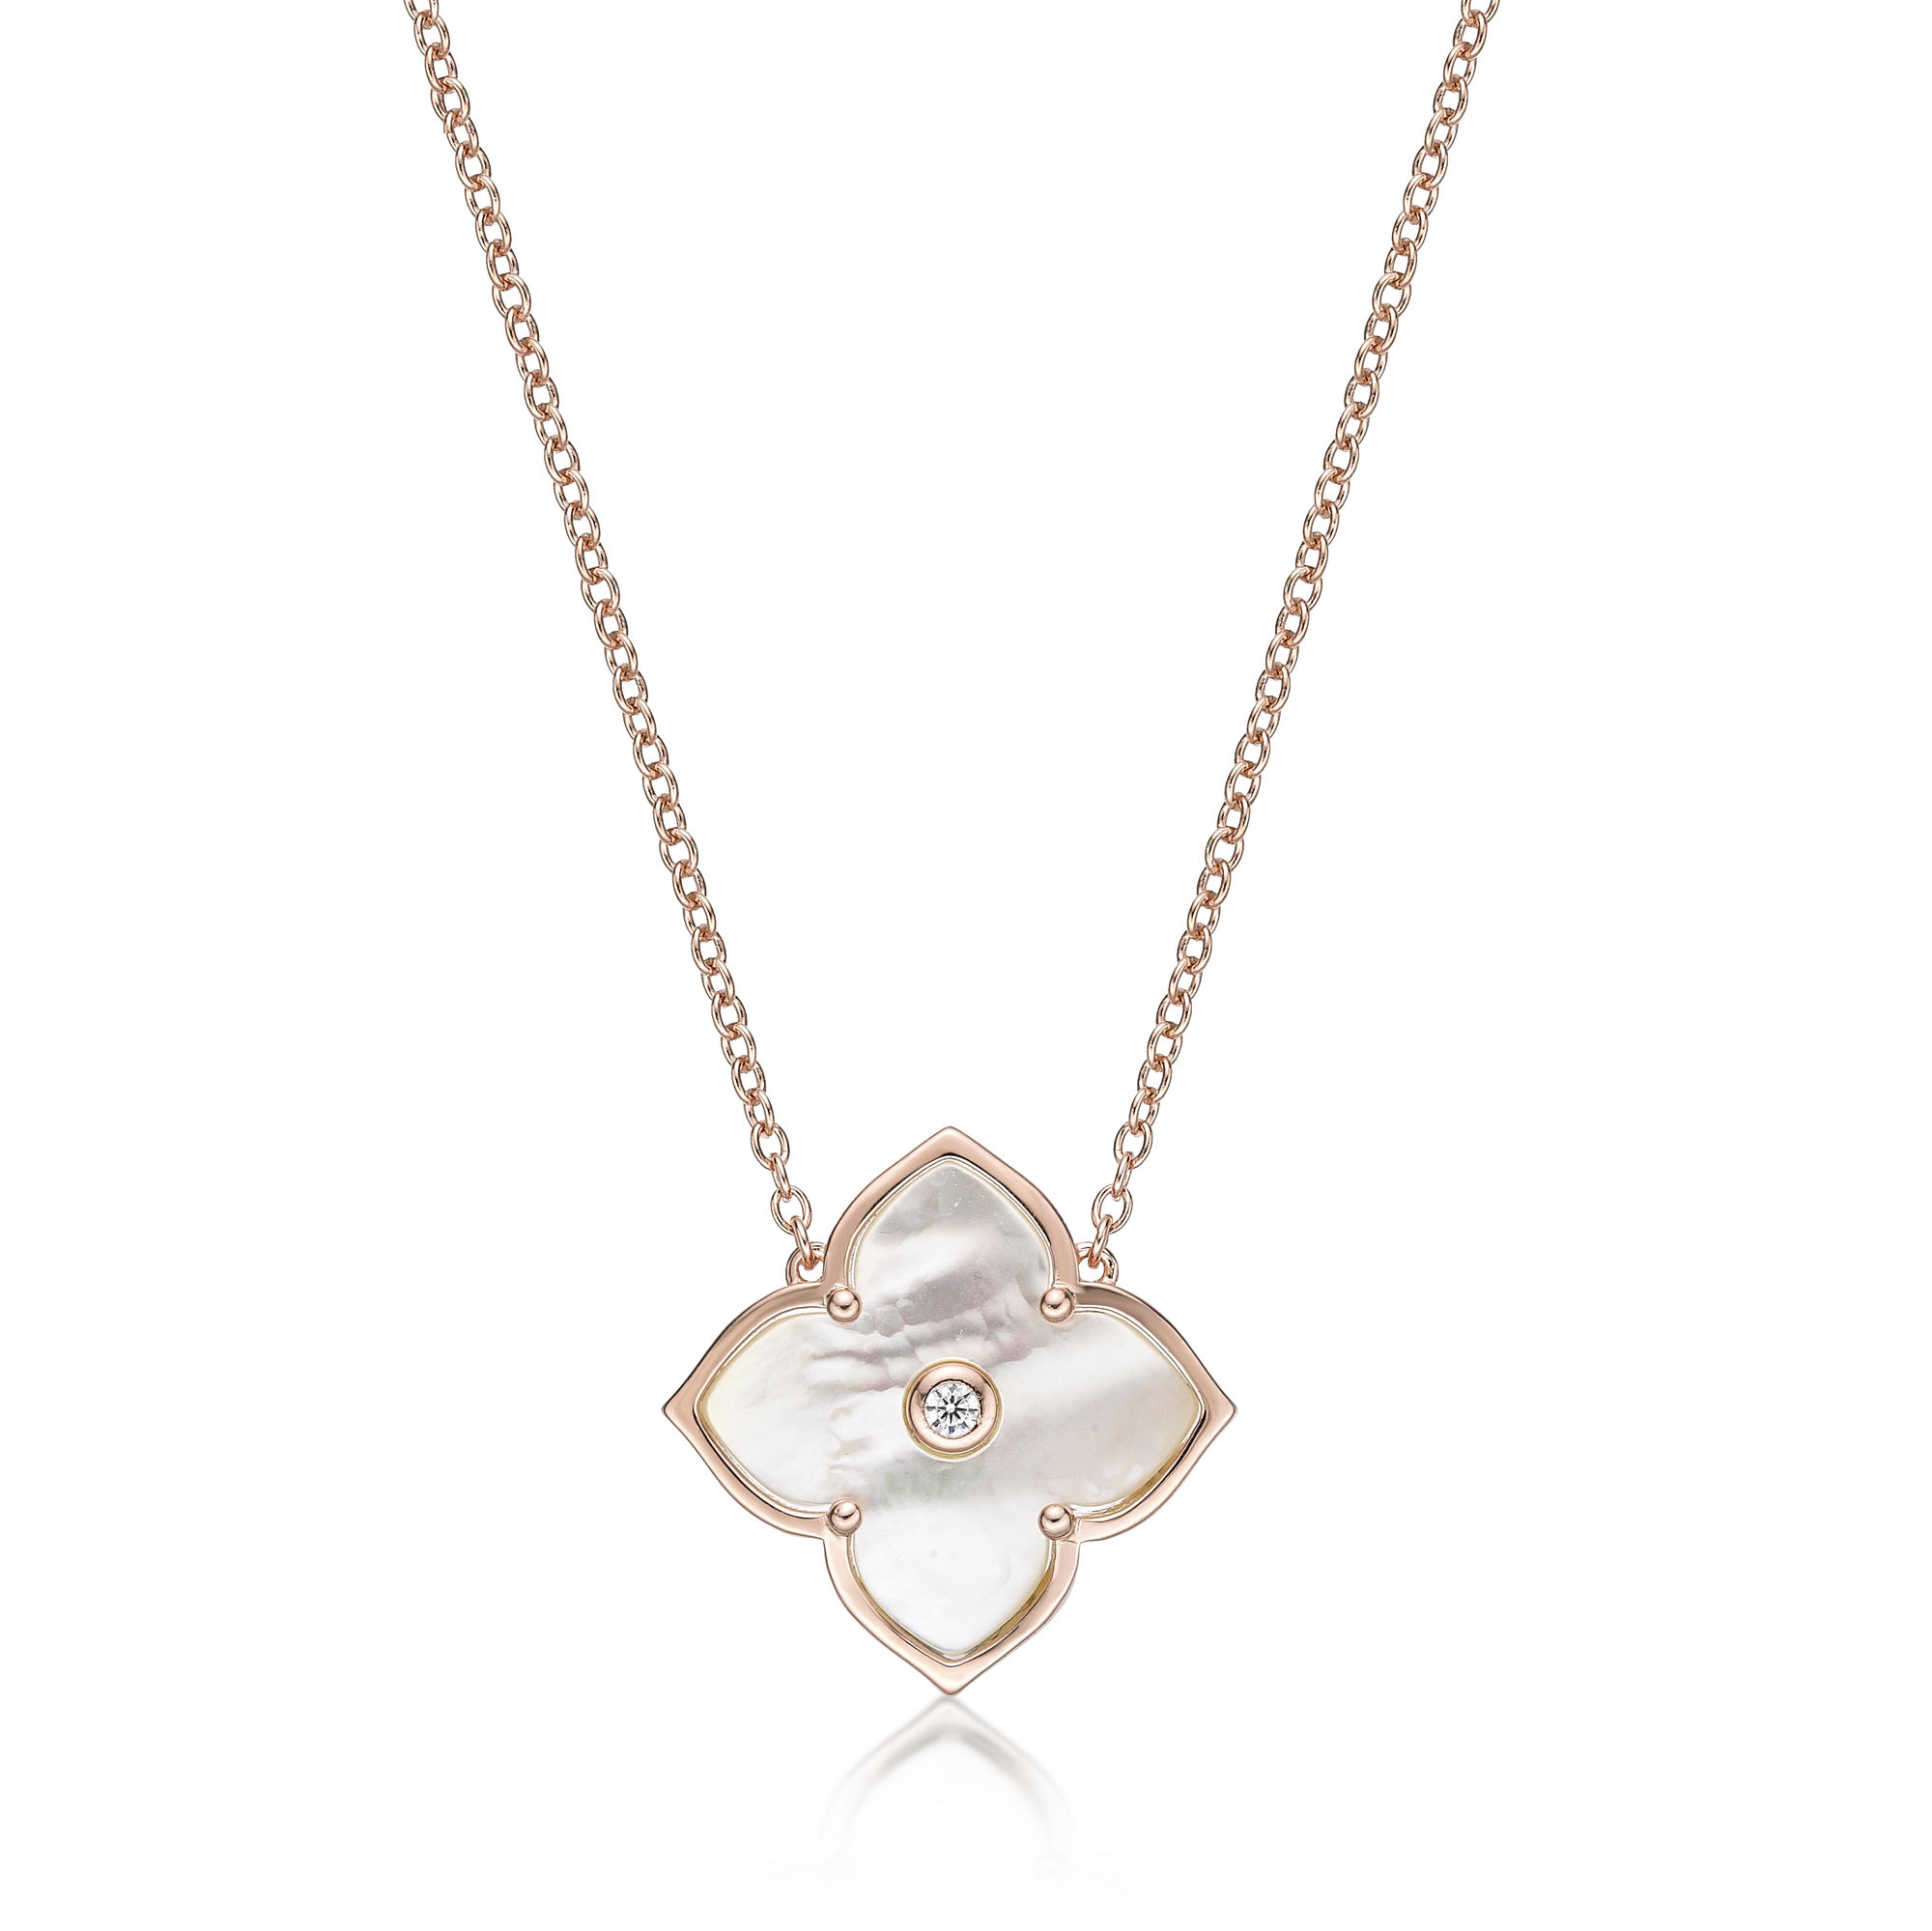 48633-necklace-c-z-pink-silver-1-1.jpg